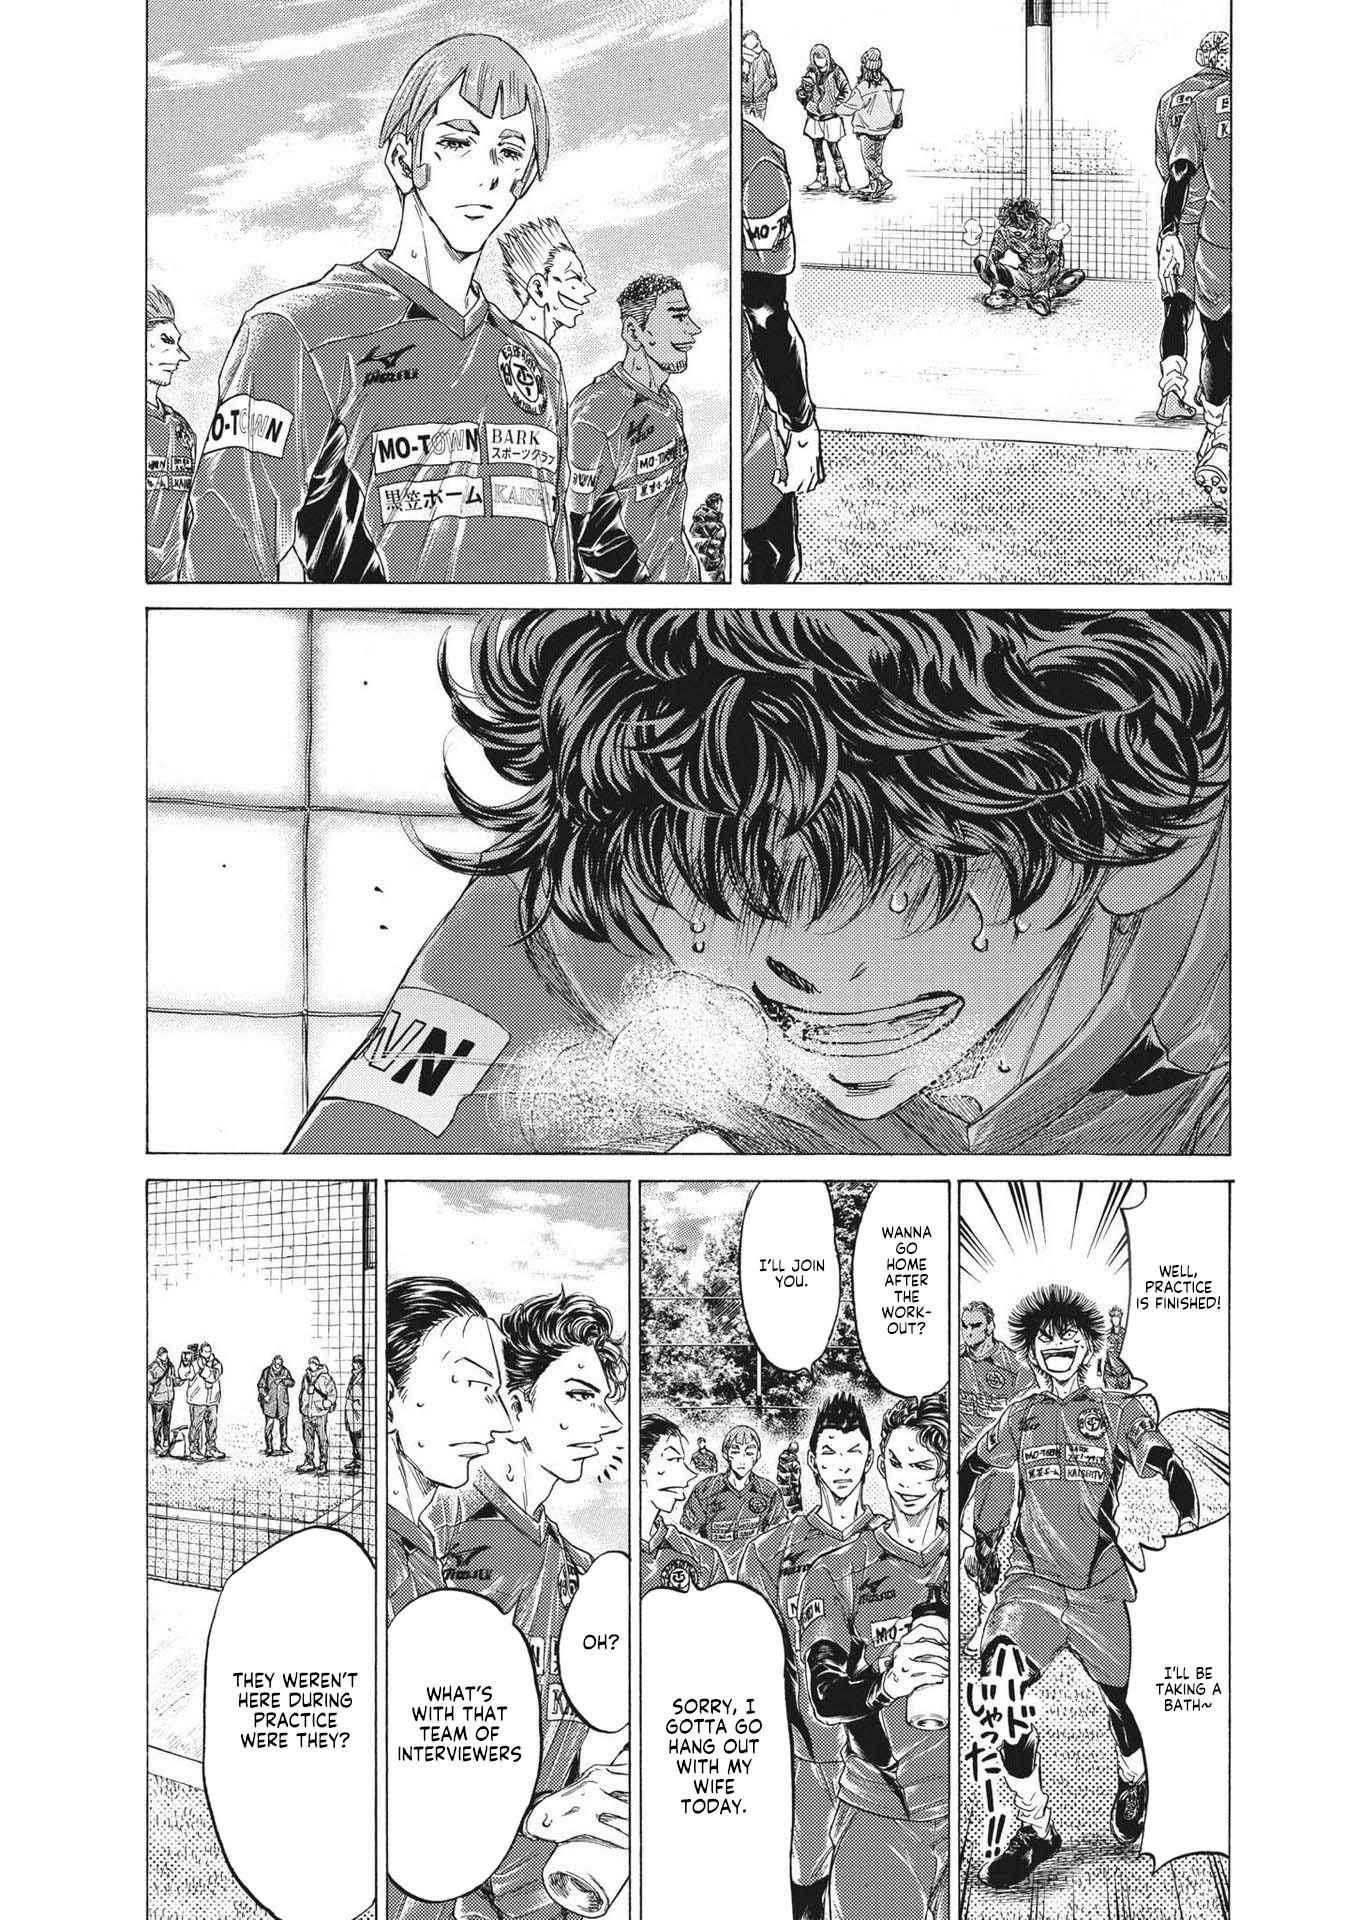 Found Another Interesting Soccer Manga: AO ASHI